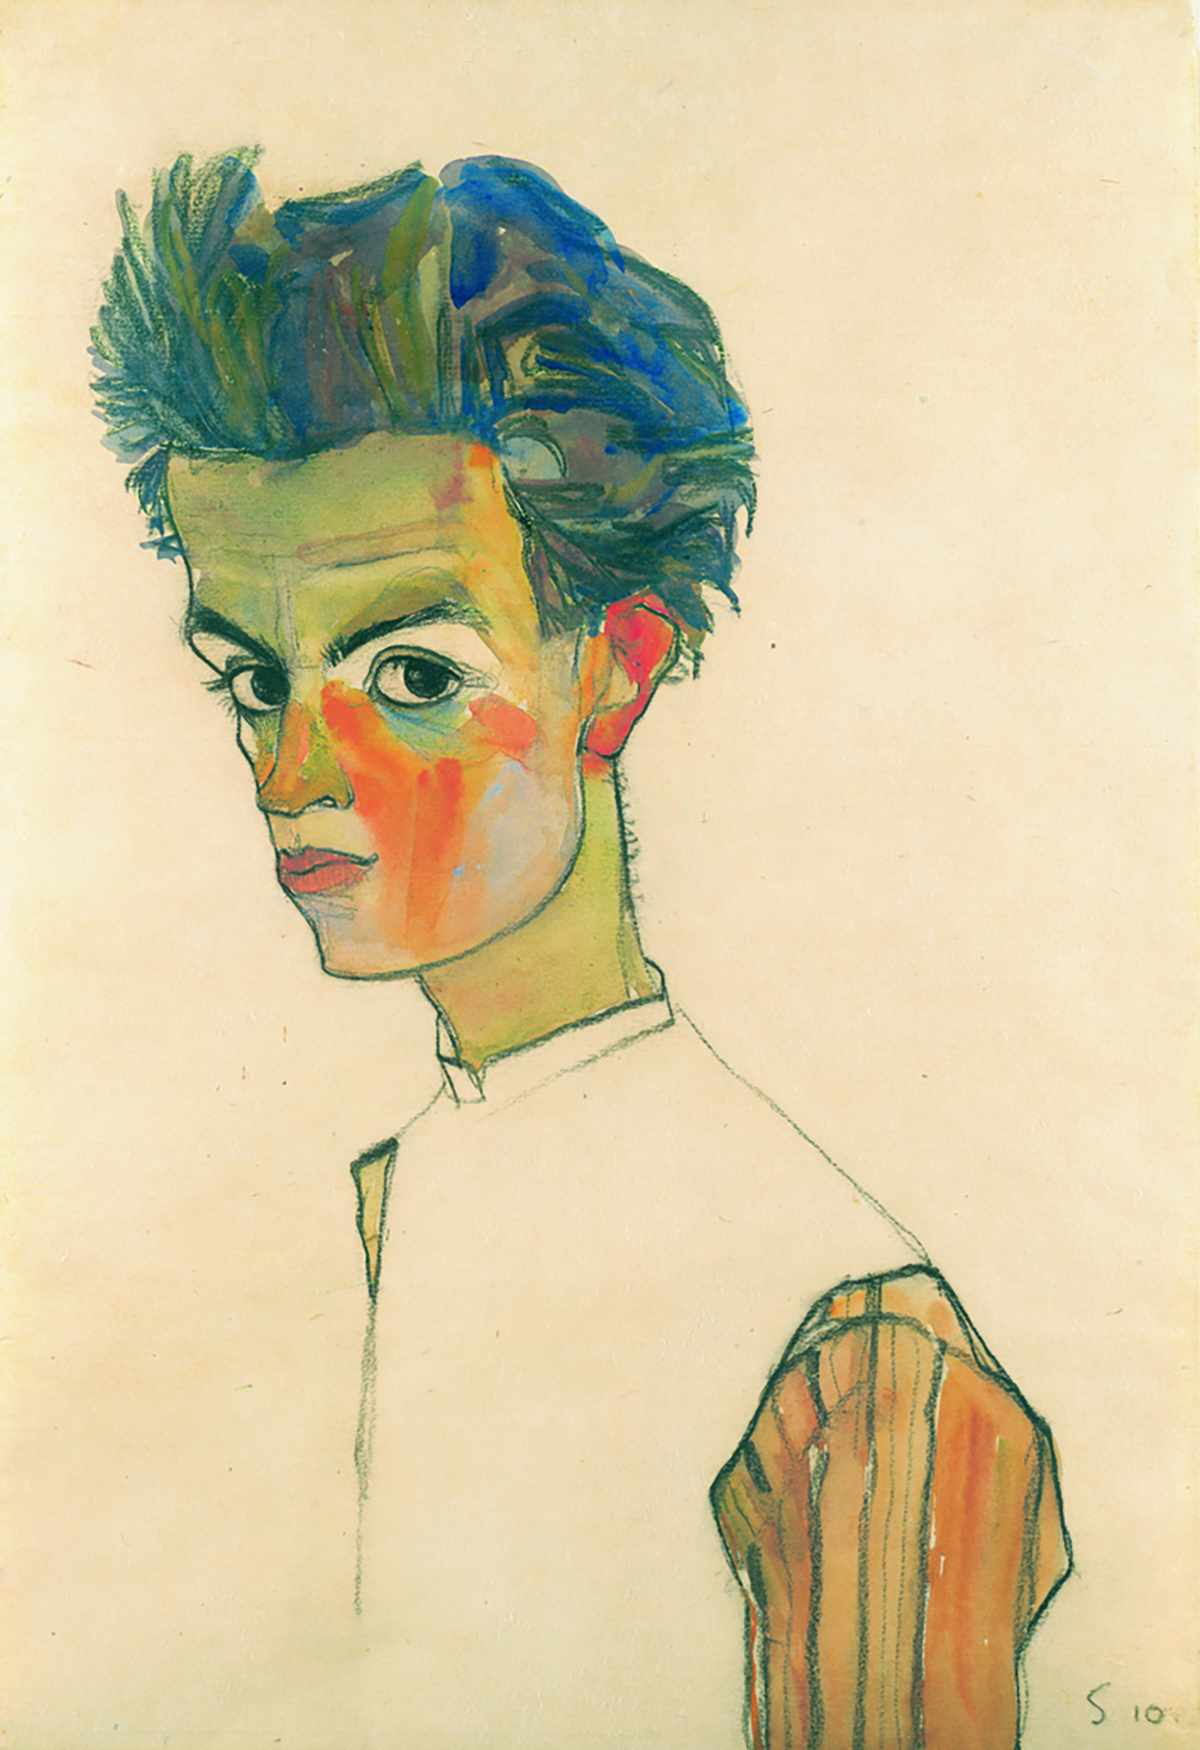 Self portrait painting of Egon Schiele in striped shirt by Austrian artist Egon Schiele